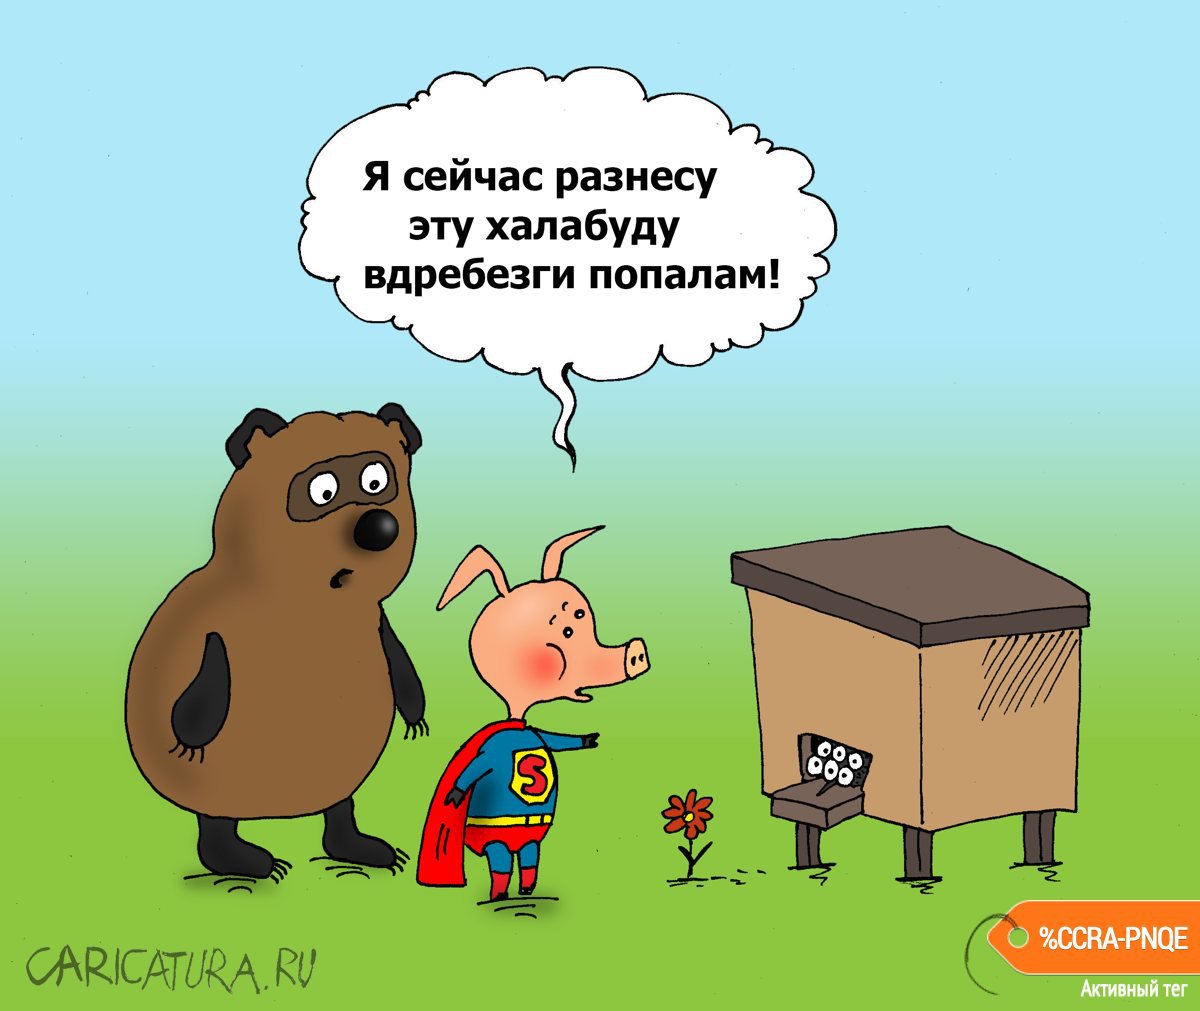 Карикатура "Разбой", Валерий Тарасенко